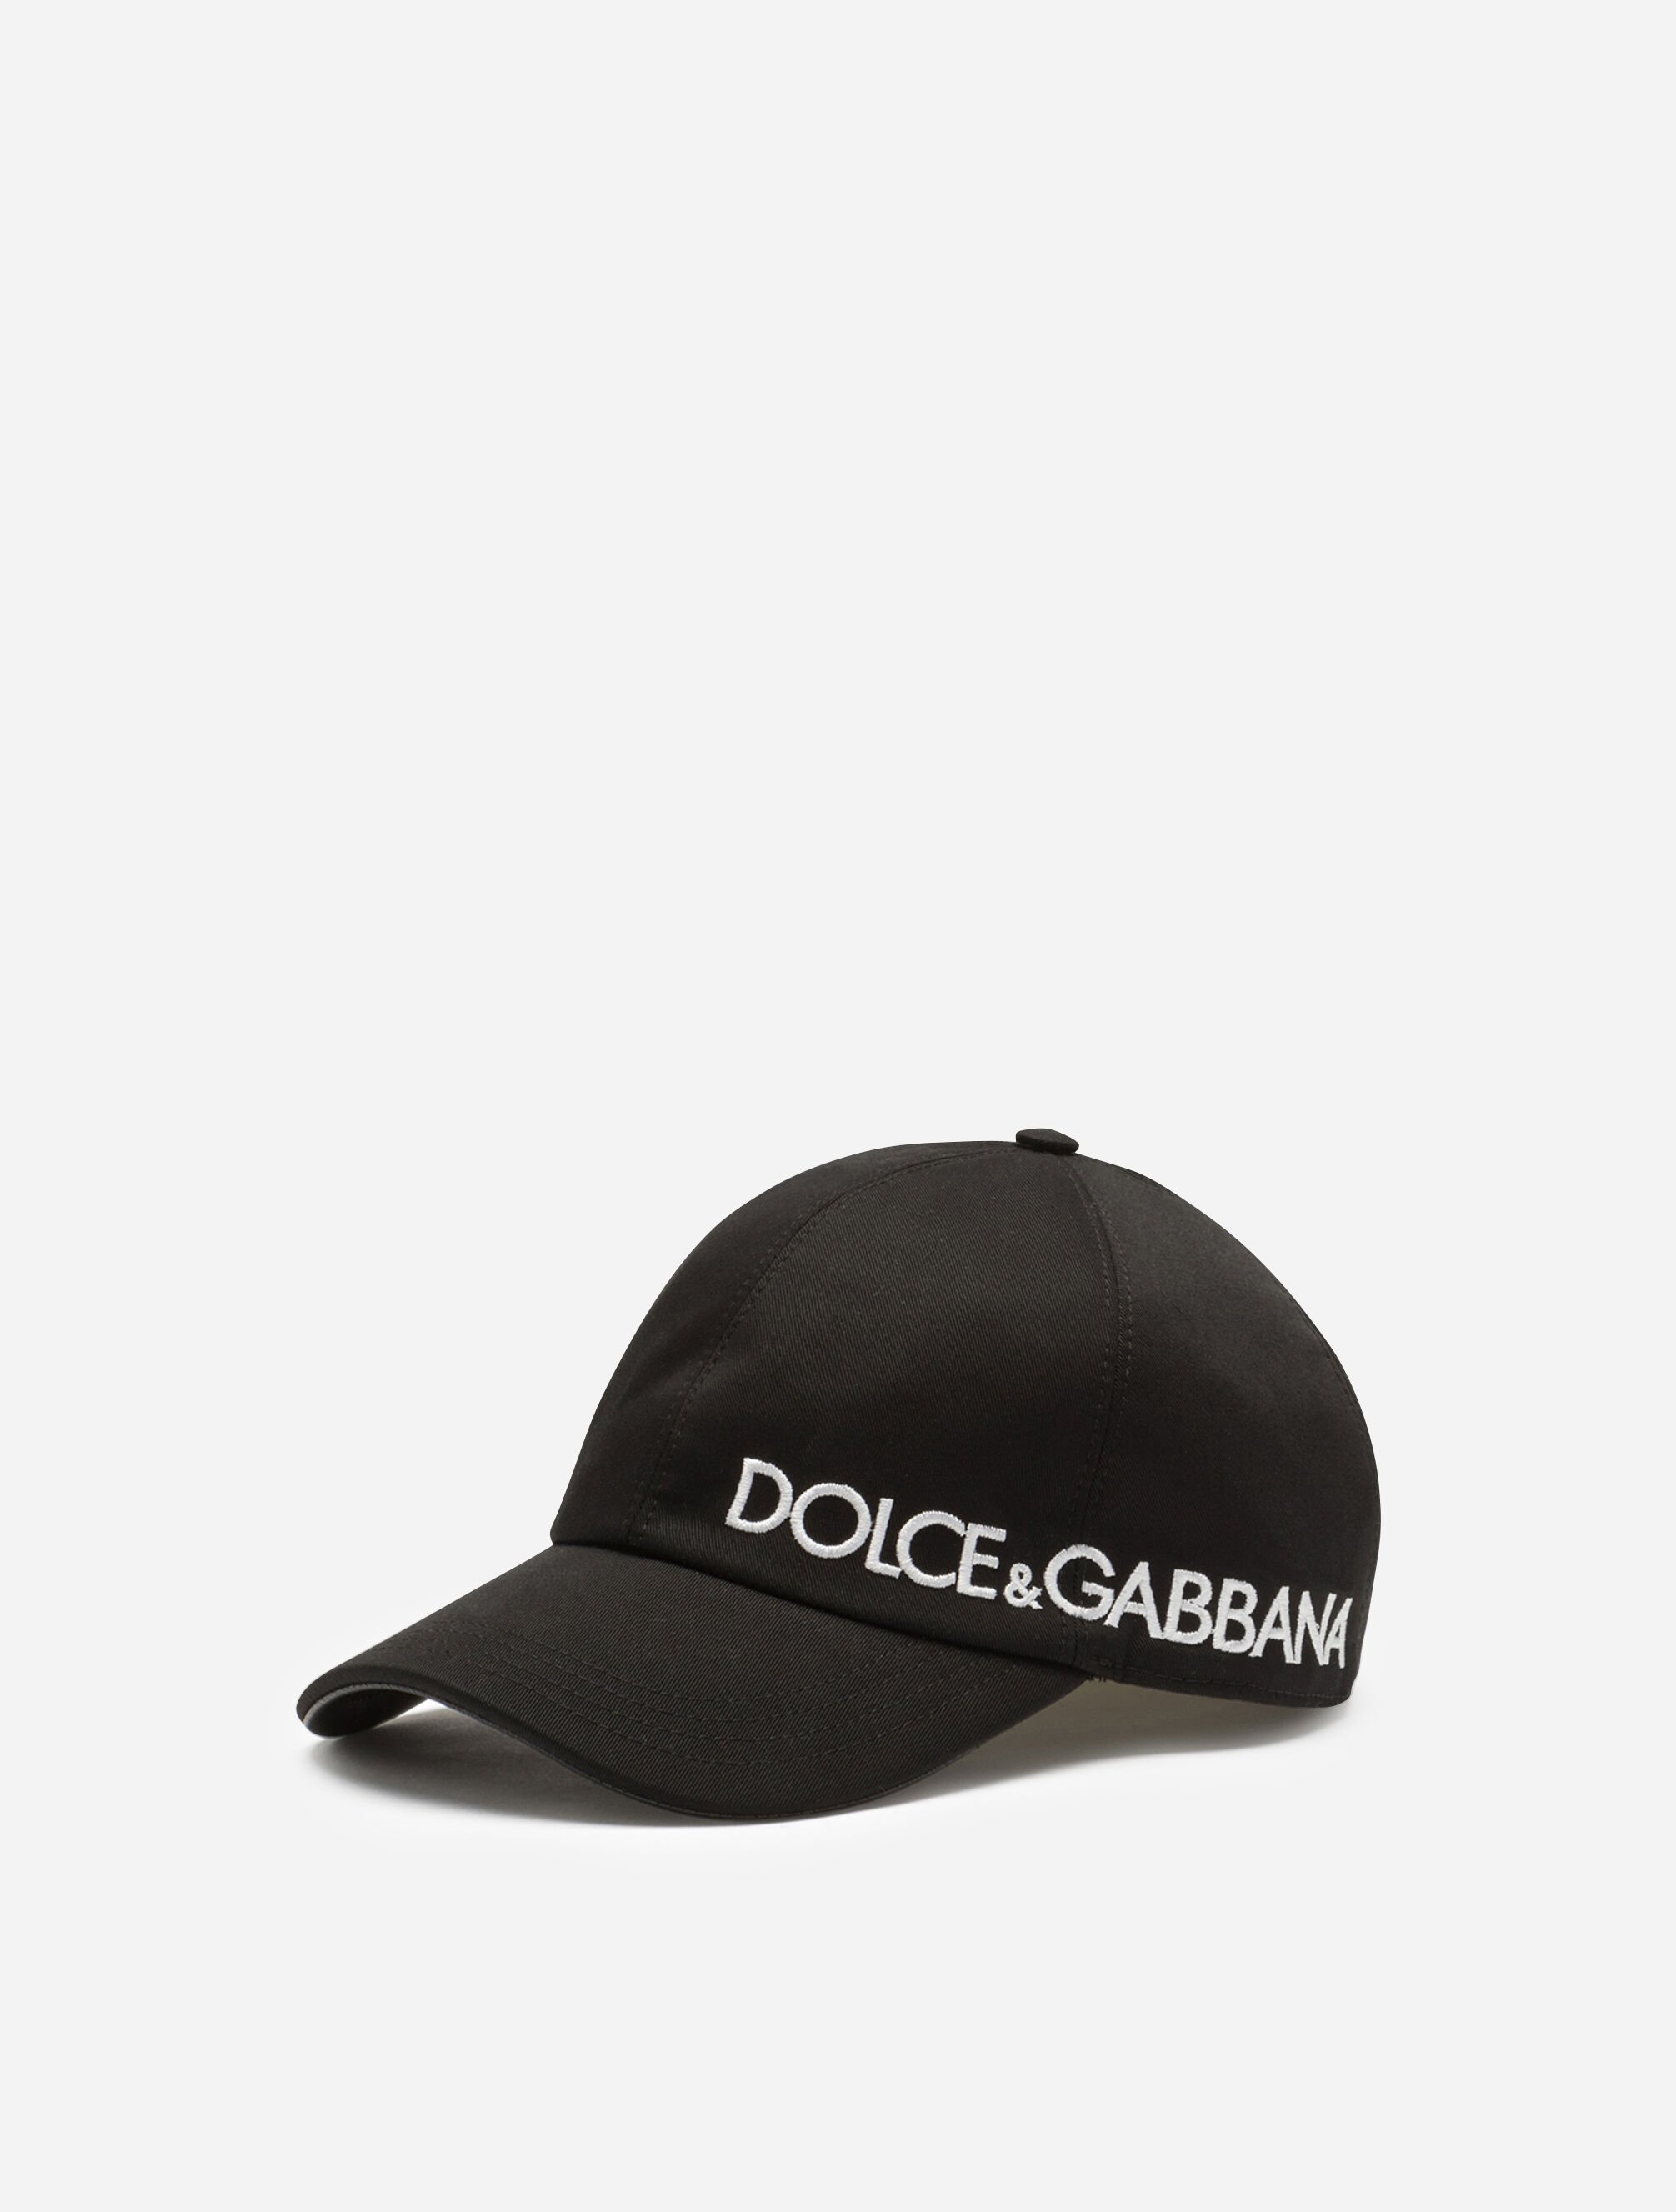 Dolce & Gabbana Dolce&Gabbana baseball cap with embroidery Print GH764AFS6N5